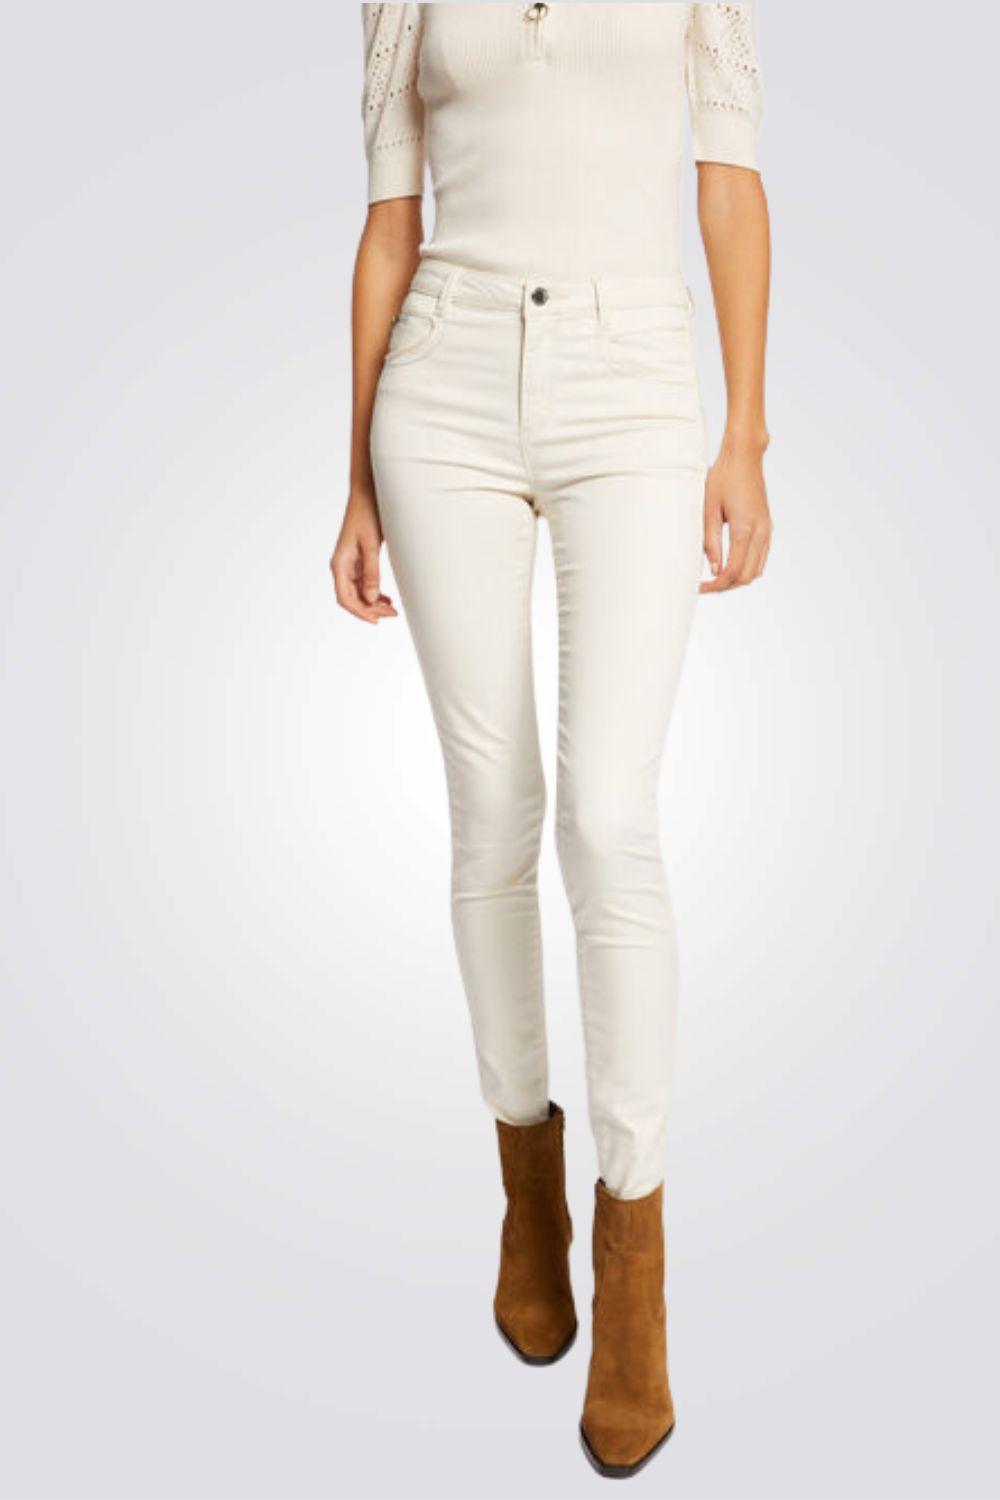 MORGAN - ג'ינס עם פרטי תכשיט בצבע שנהב - MASHBIR//365